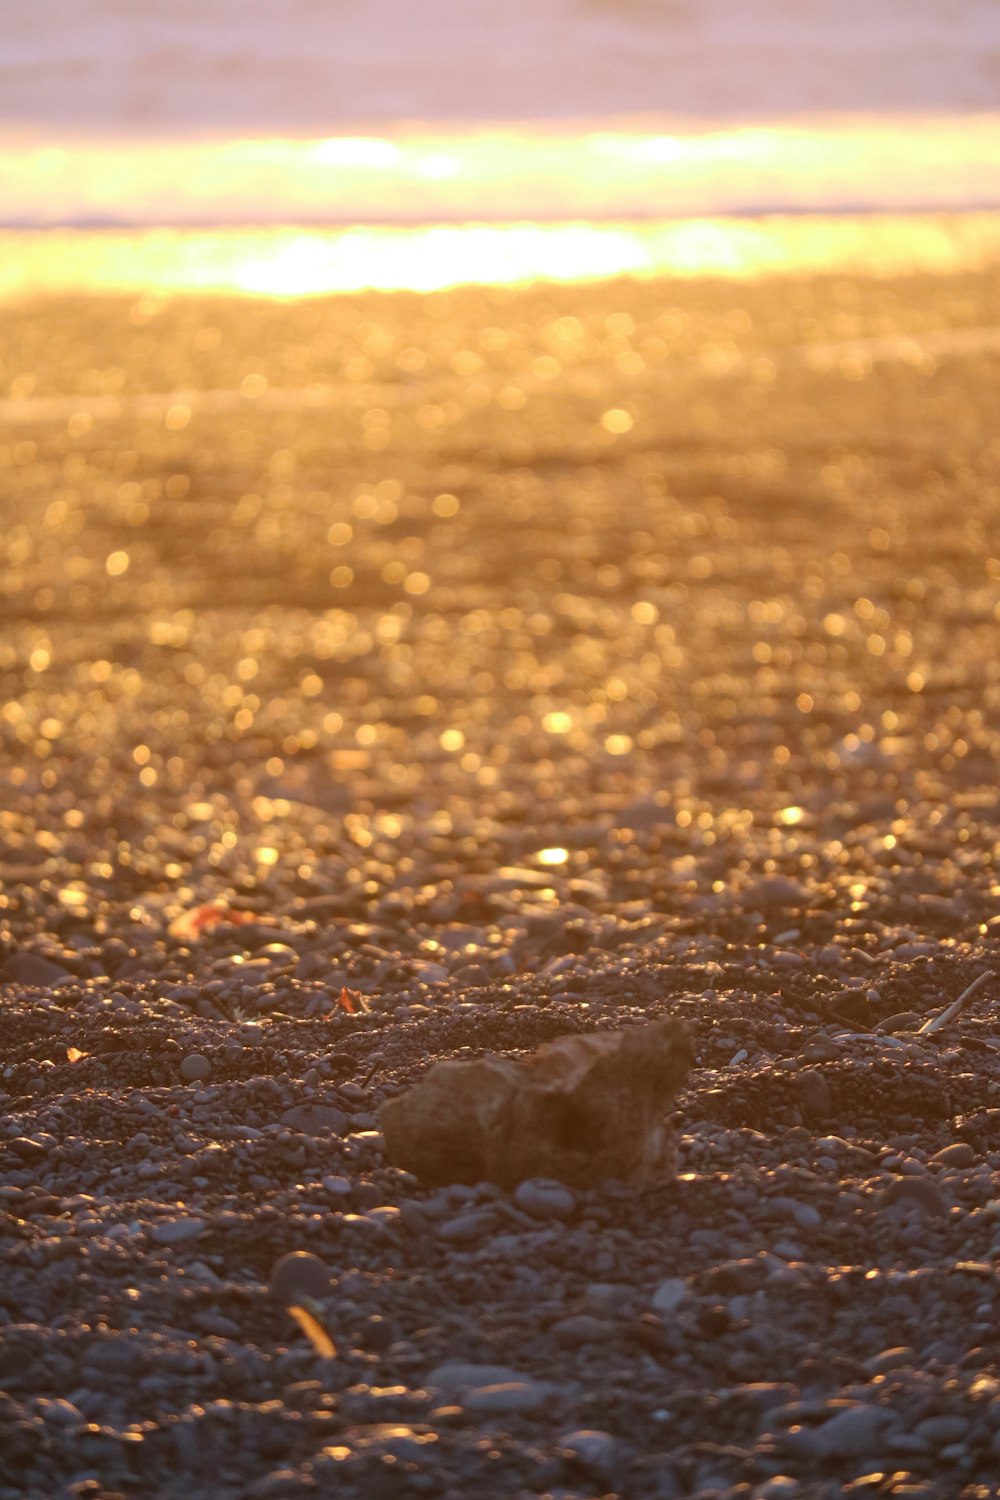 a close up of a bird on a beach near the ocean